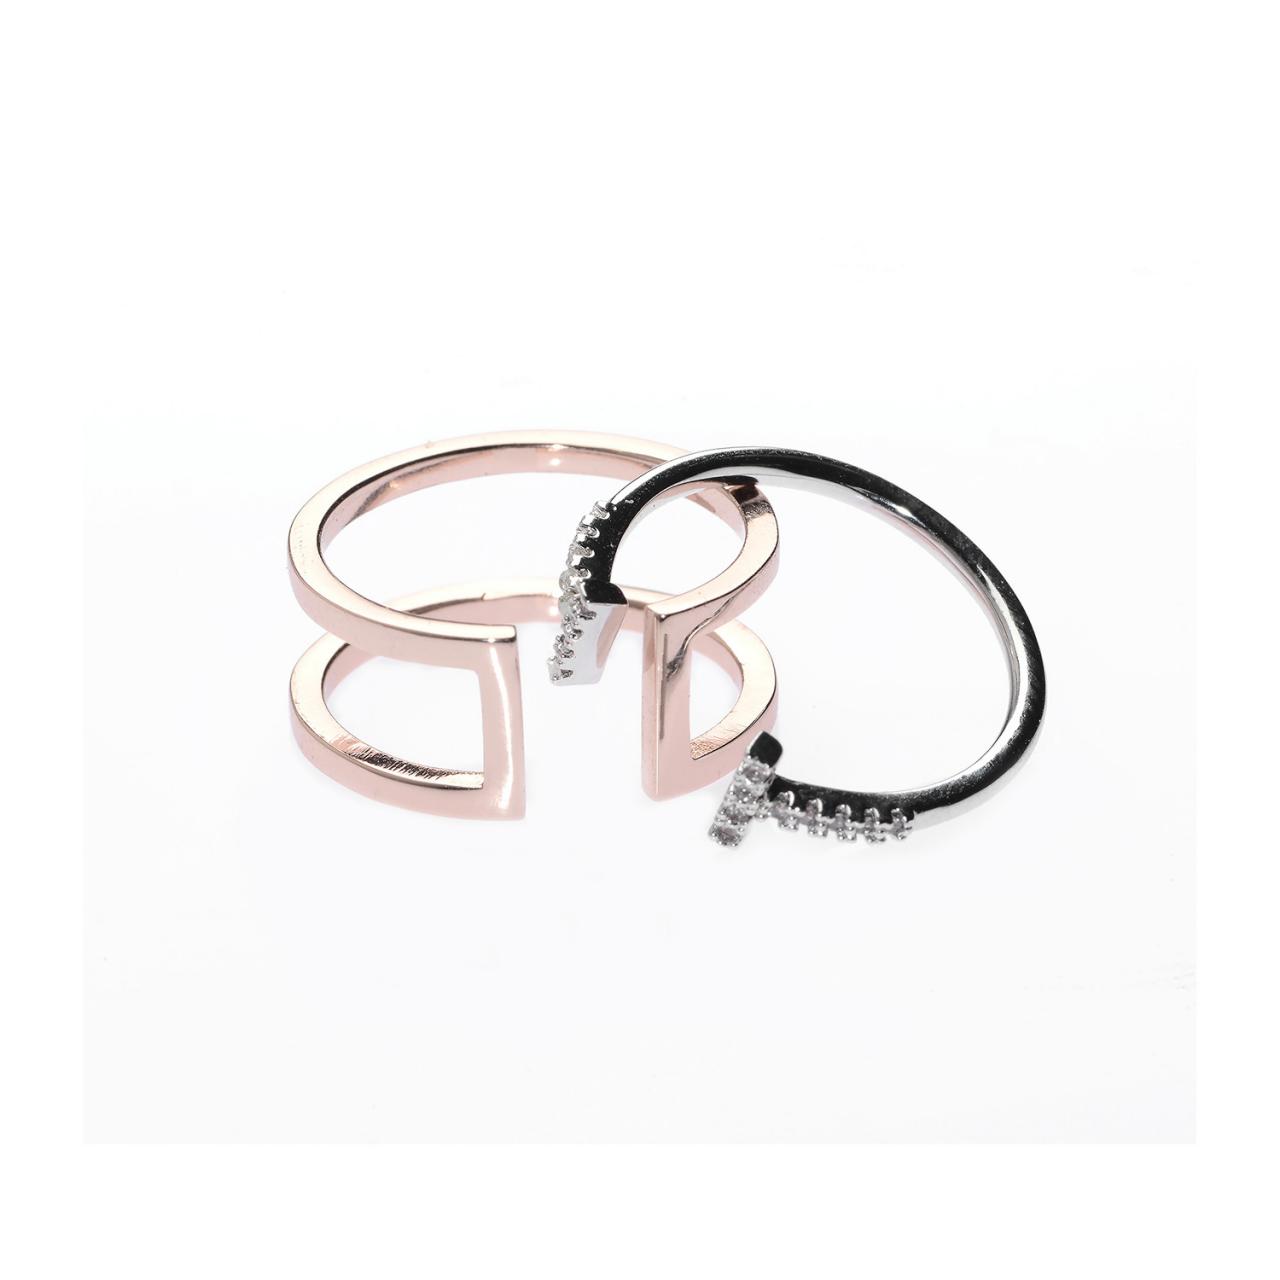 Mixed Metal Ring / Wrap Around Ring / Silver And Gold / Zircon Ring / Ring Set / Silver Ring / Gold Ring / Open Ring / Bling Ring / Minimal